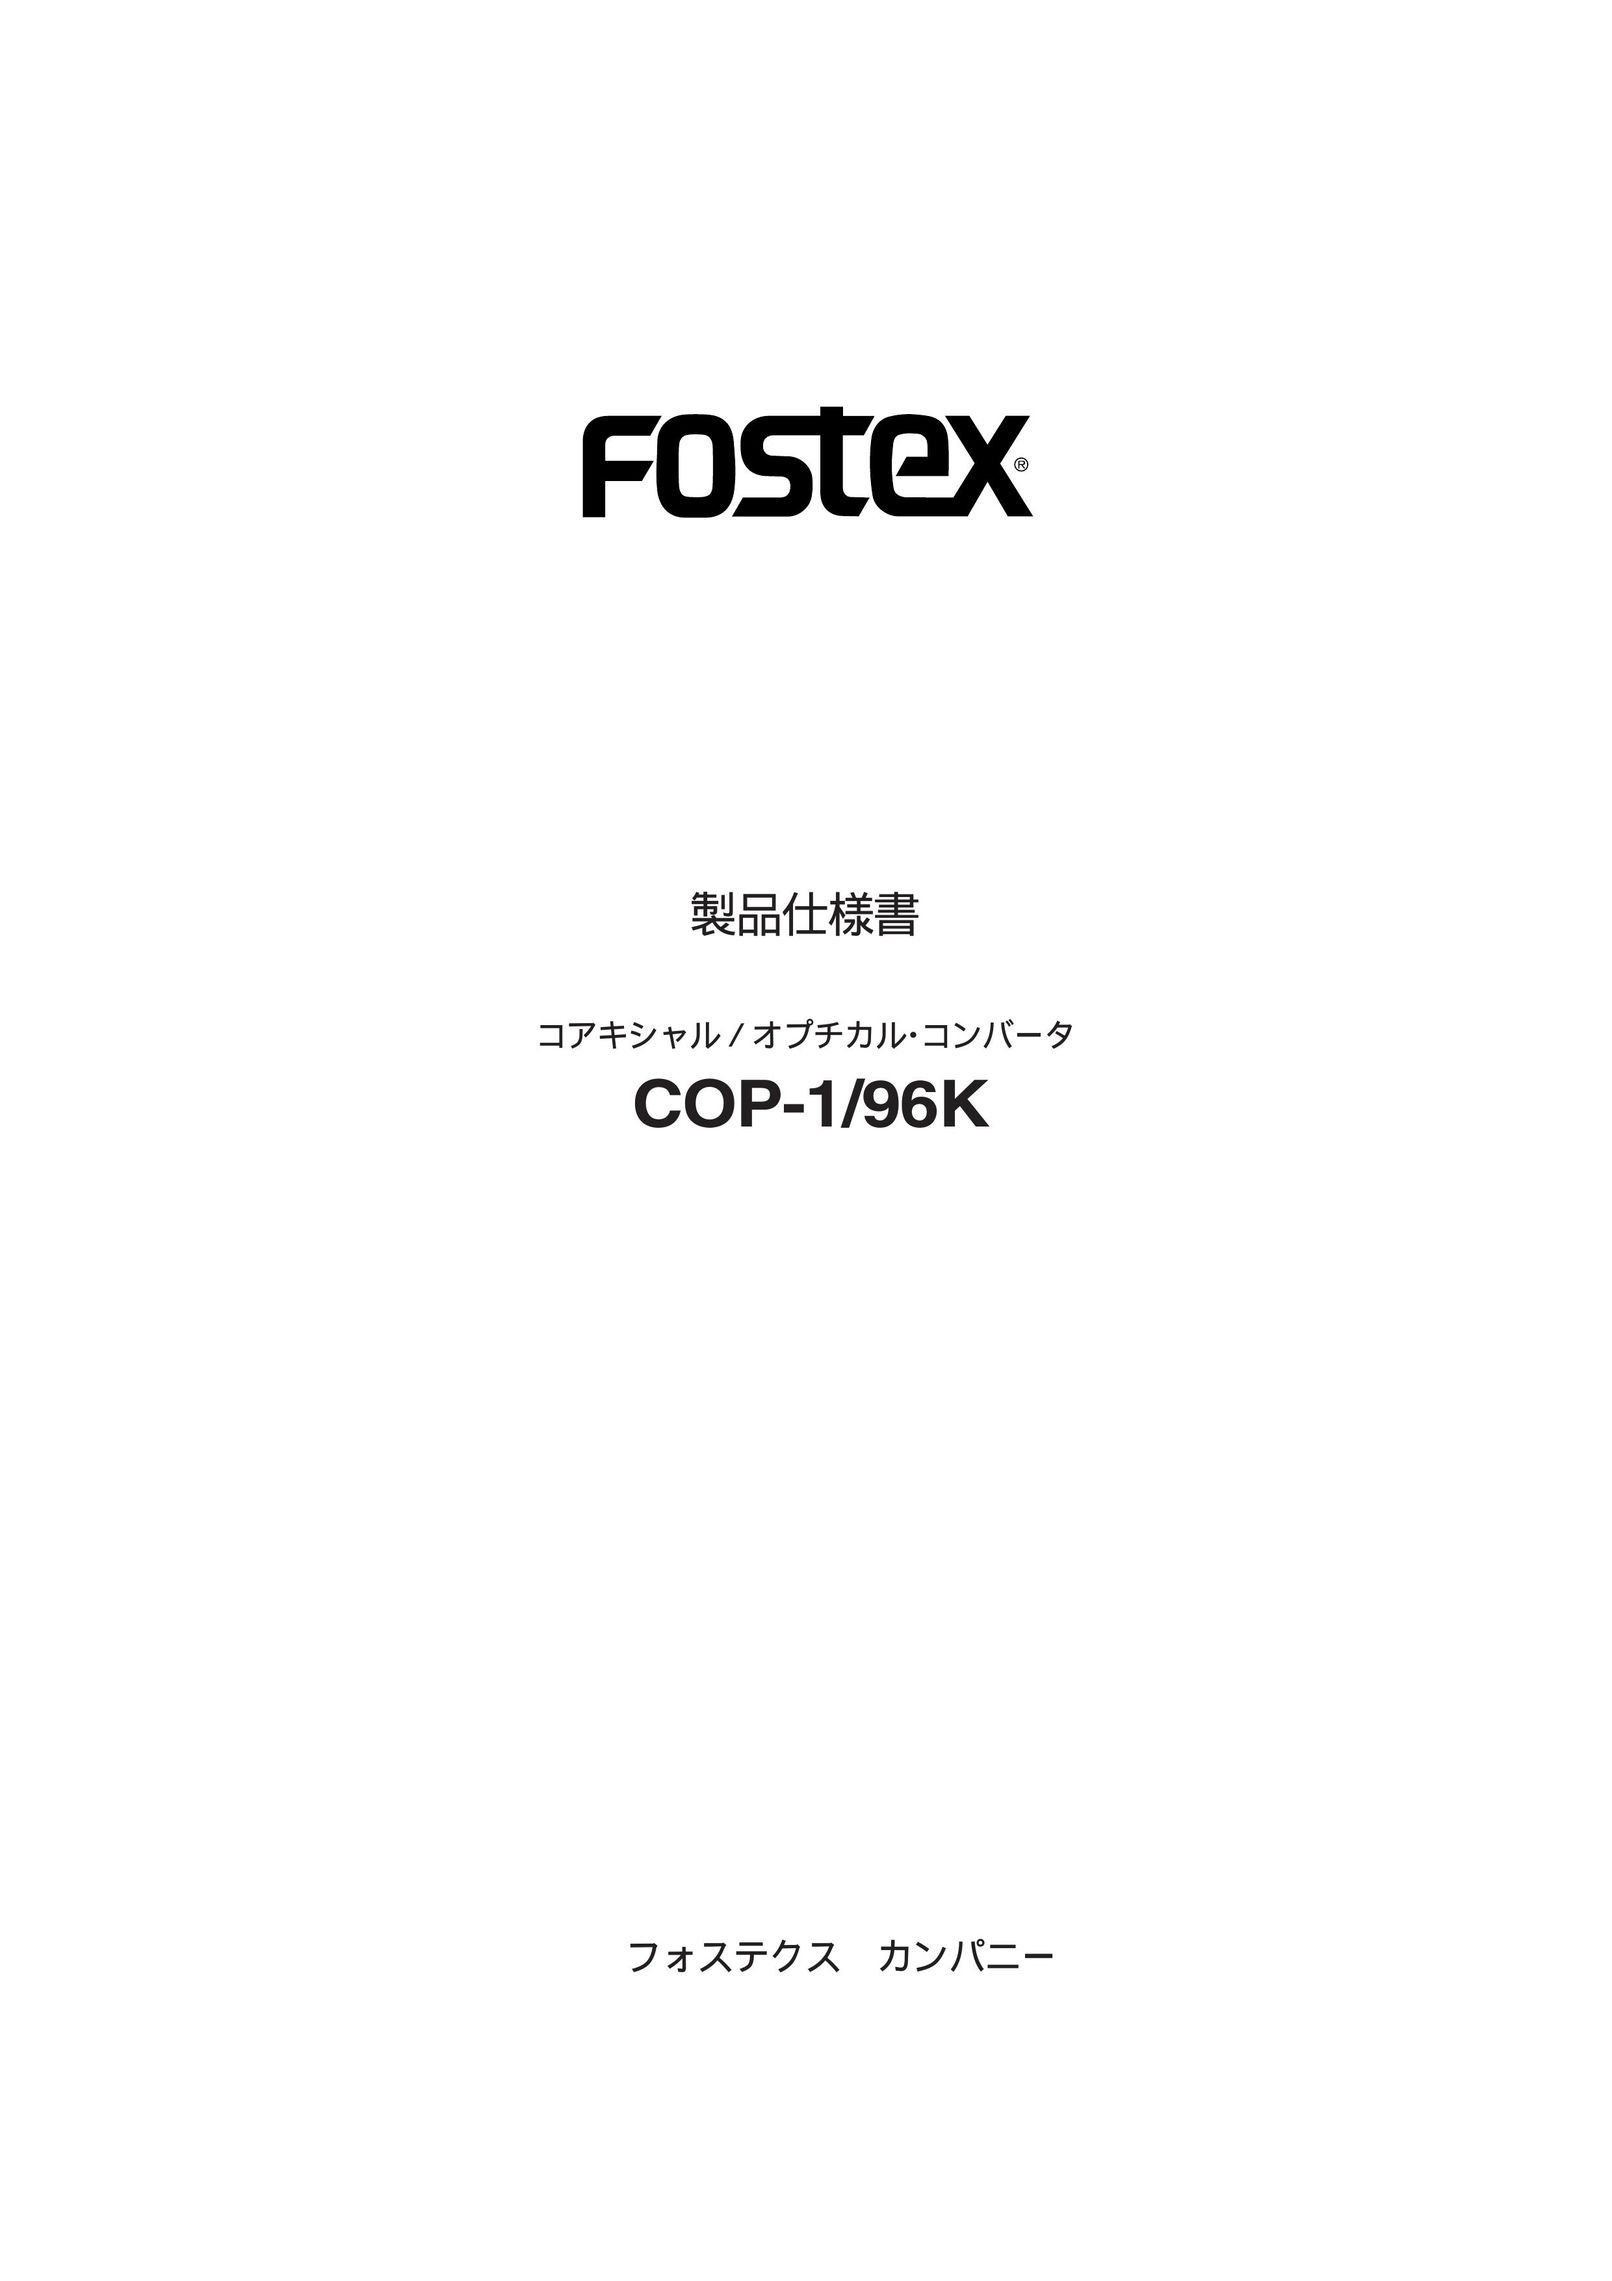 Fostex COP-1/96k TV Converter Box User Manual